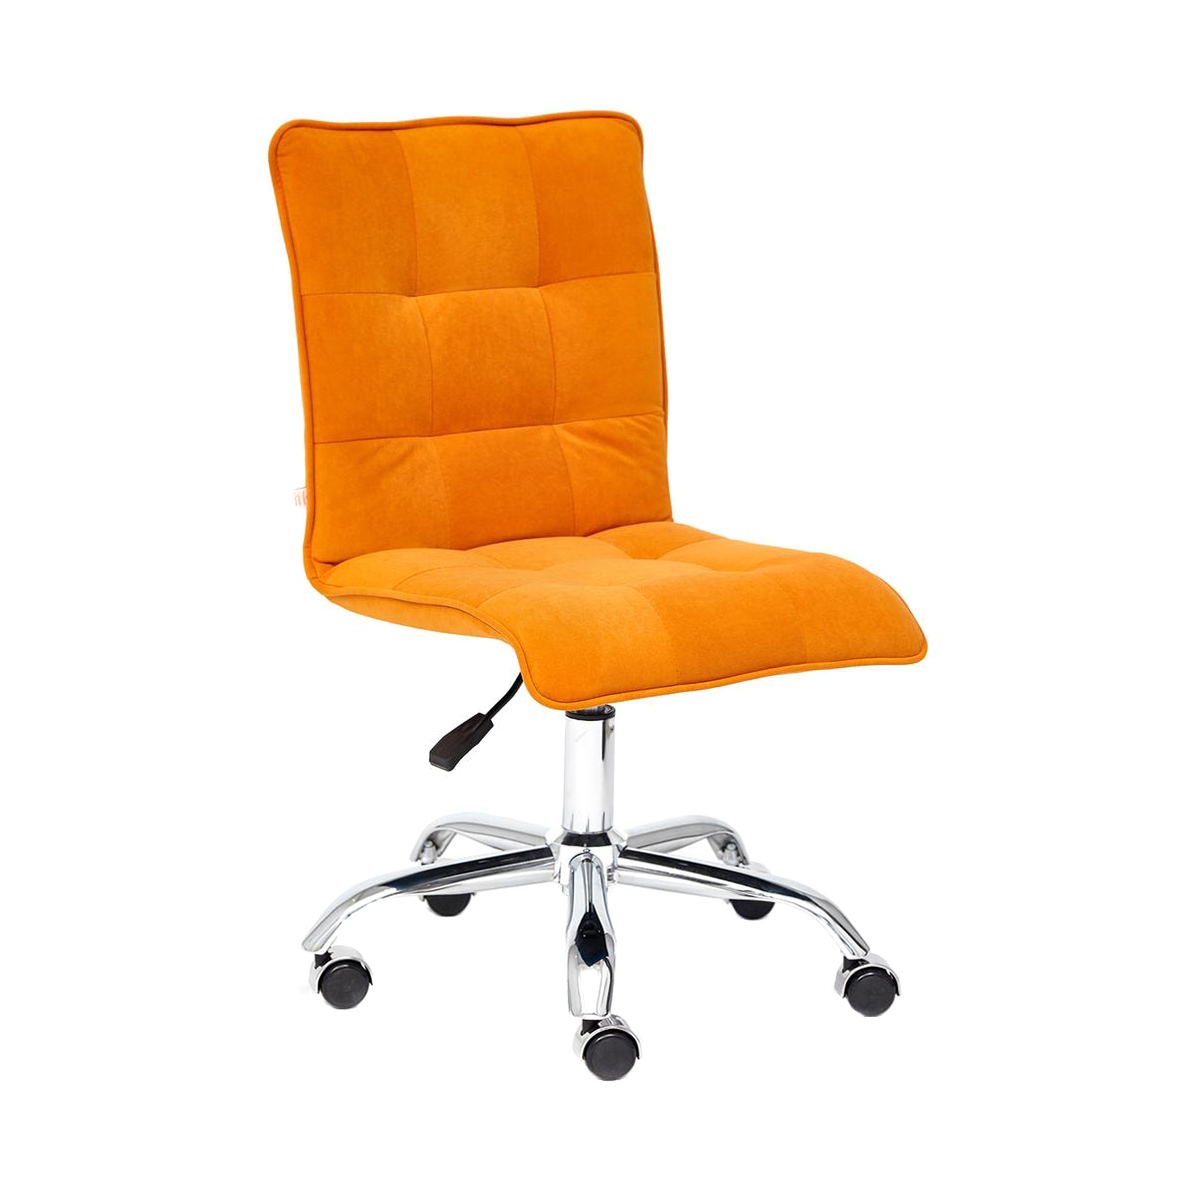 Кресло офисное TC до 100 кг 96х45х40 см оранжевый кресло офисное tc до 100 кг 96х45х40 см коричневый